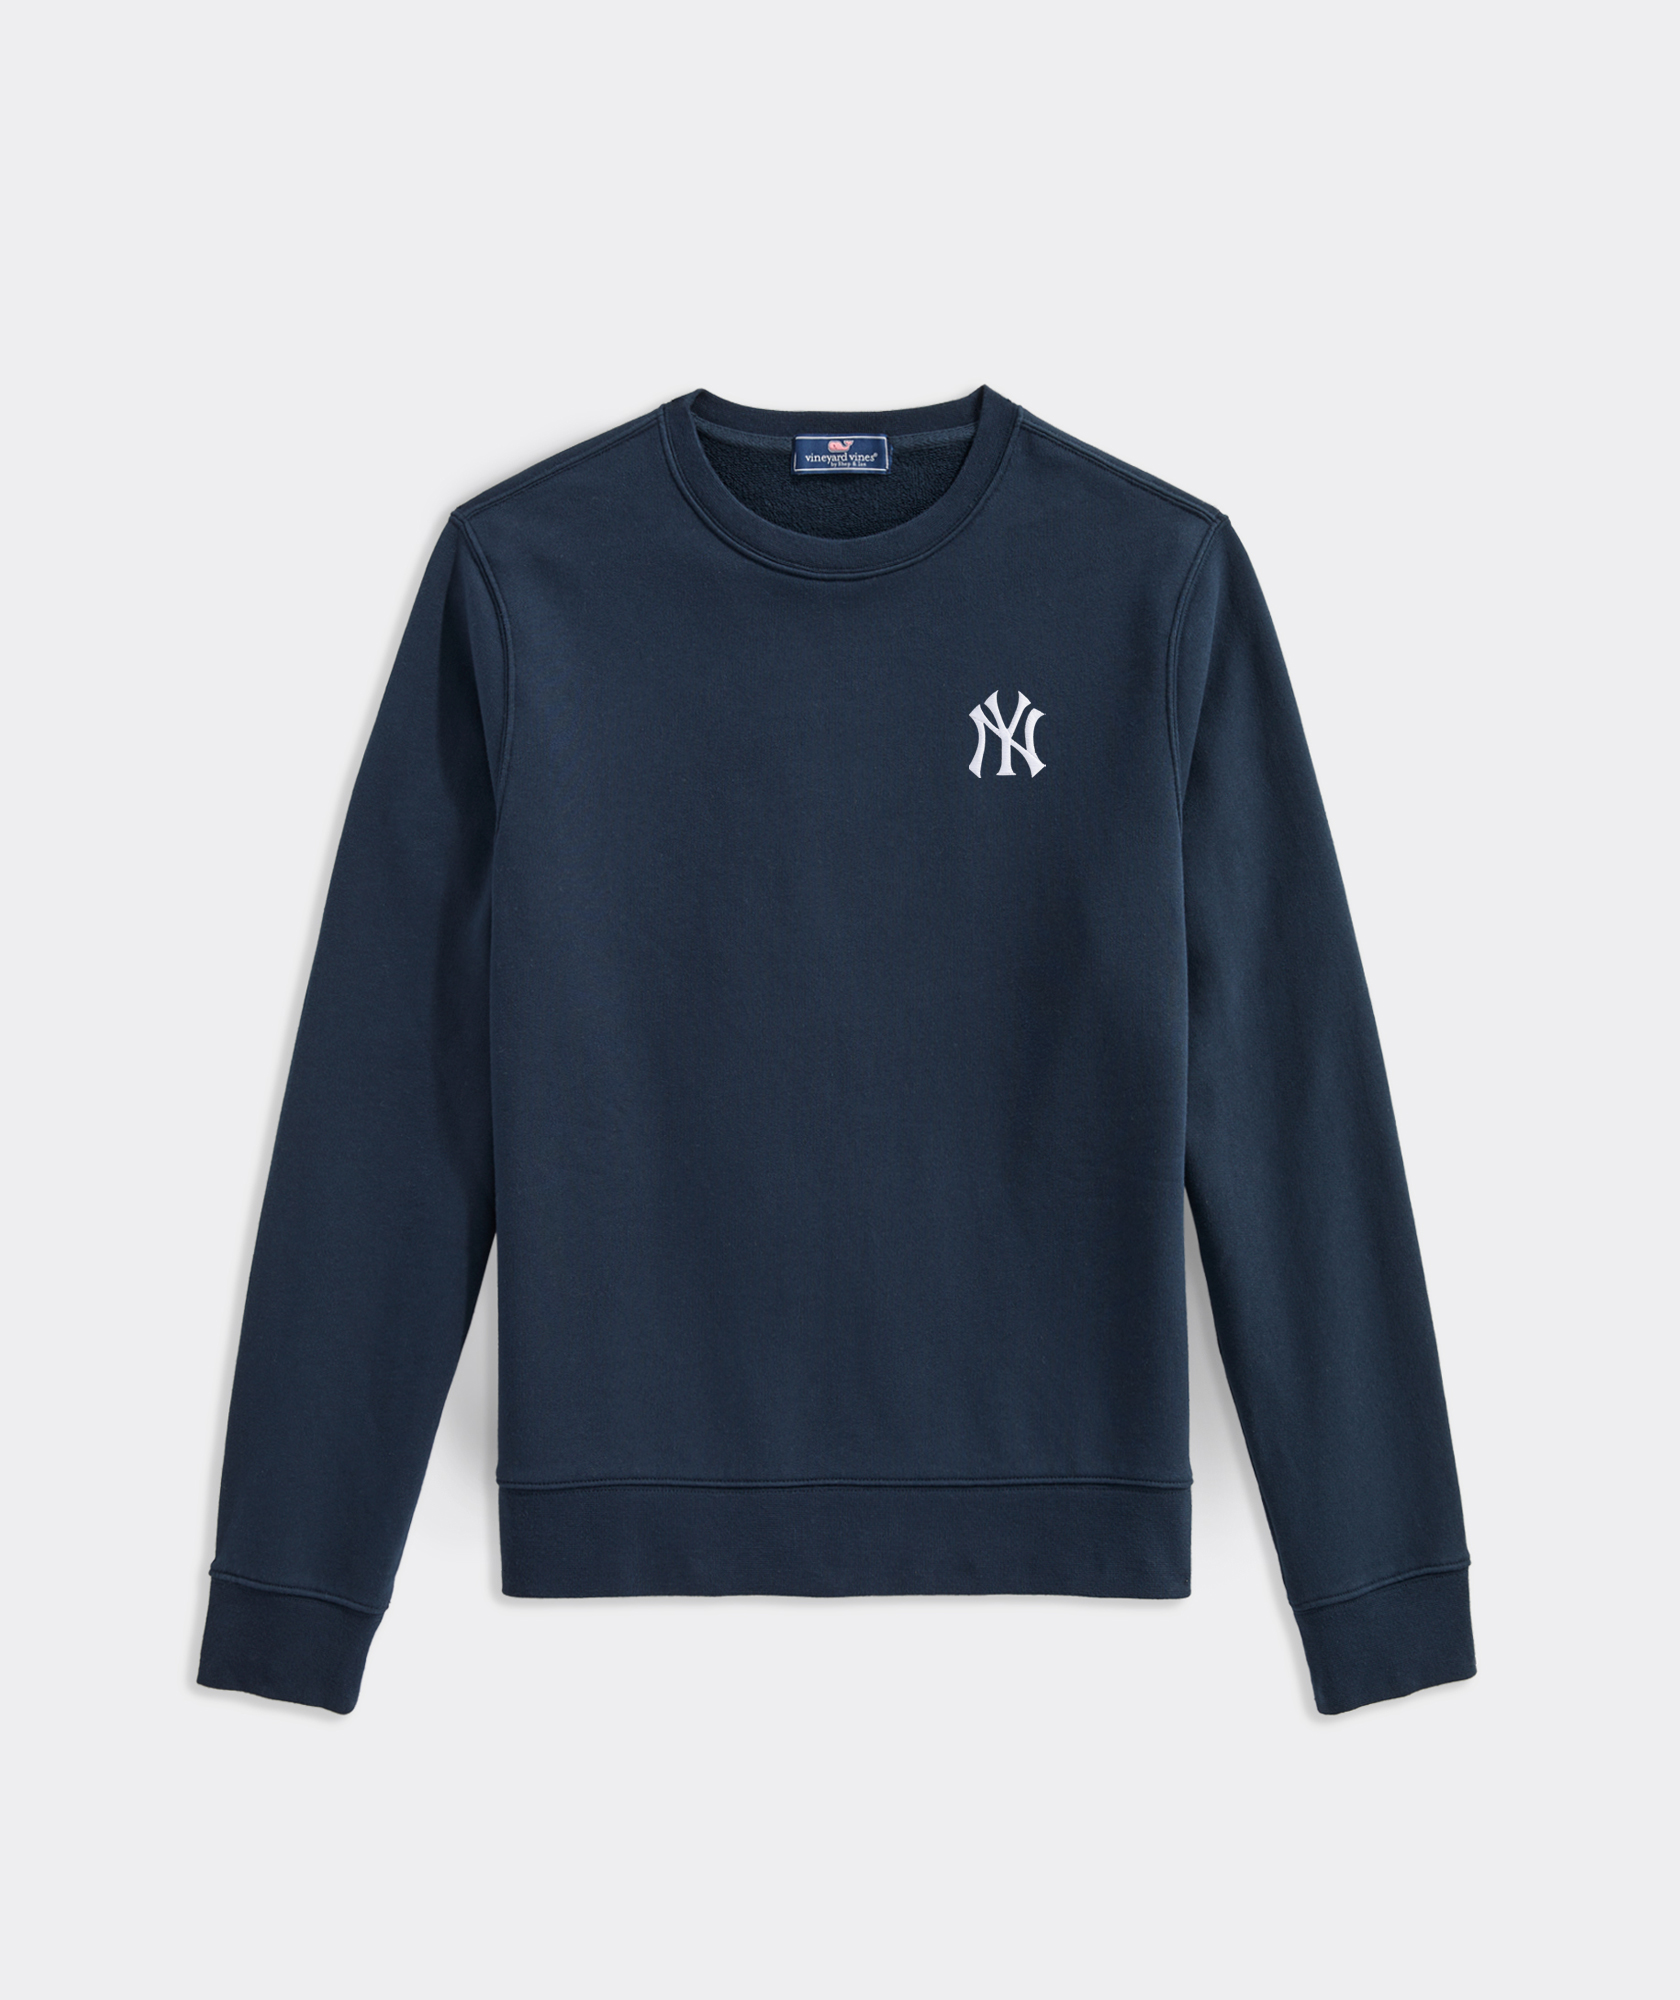 NewYork Yankees MLB Baseball Jersey Shirt For Fans in 2023